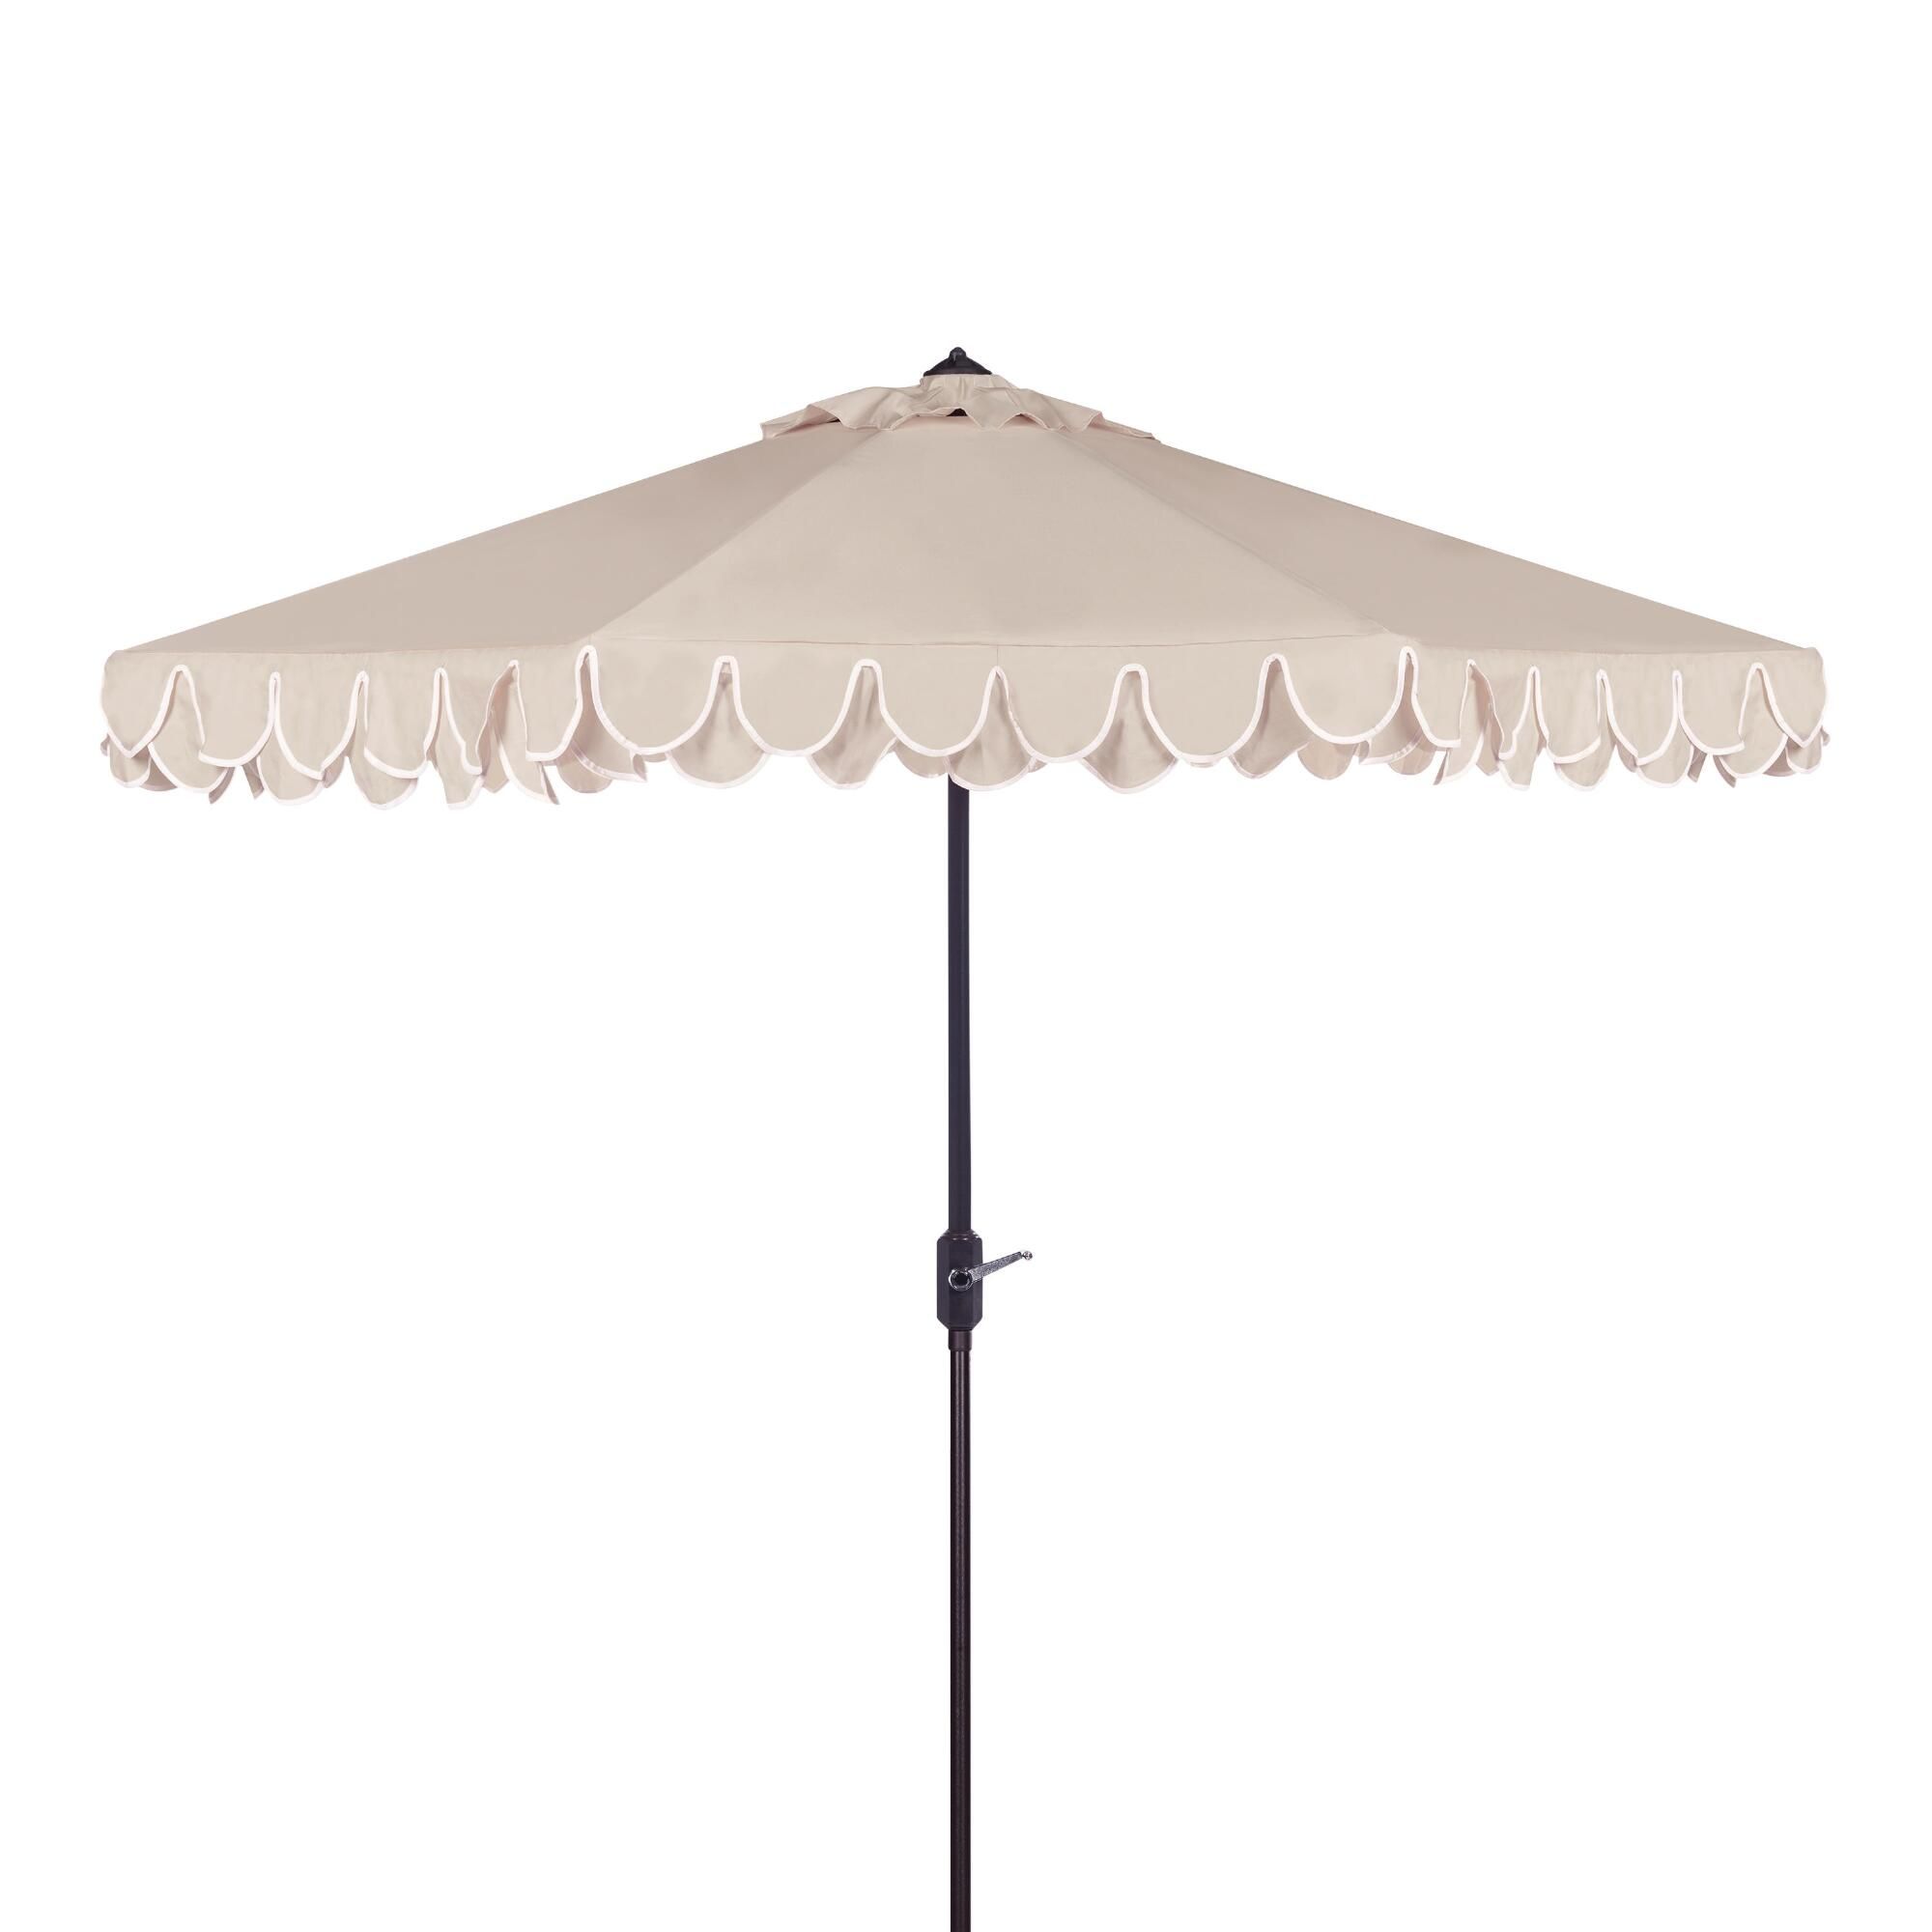 Natural Double Scallop 9 Ft Tilting Outdoor Patio Umbrella by World Market | World Market